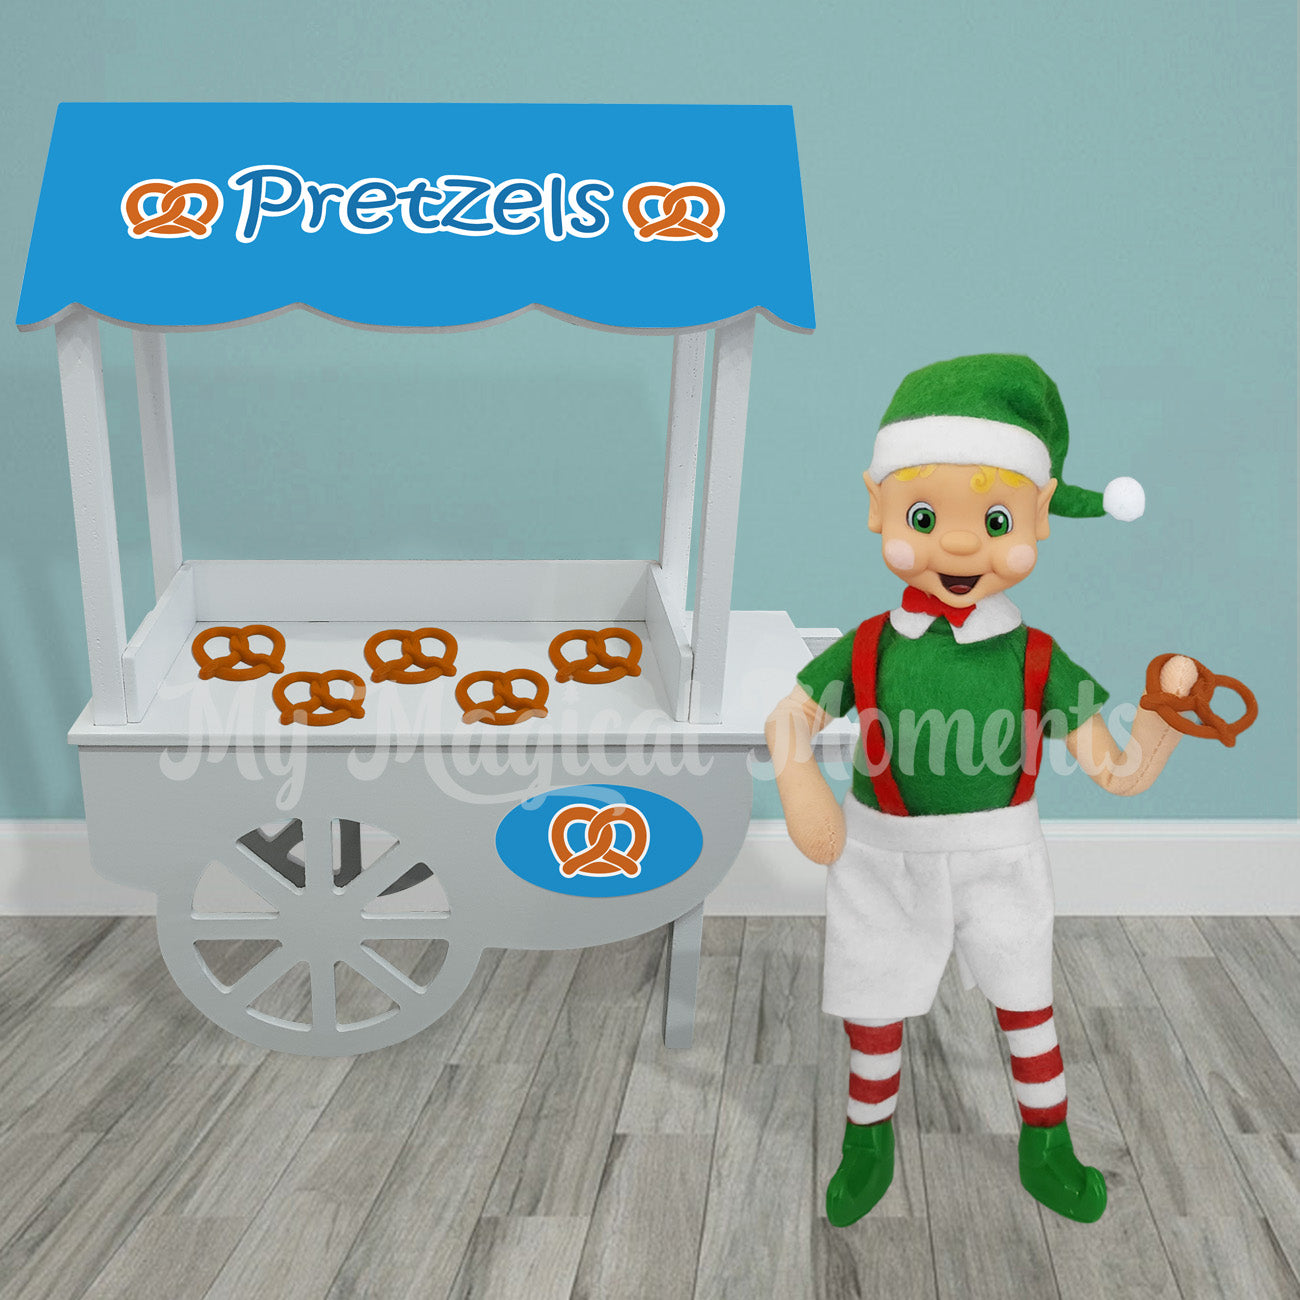 Elf set up with a pretzel stand and an elf holding a miniature pretzel prop